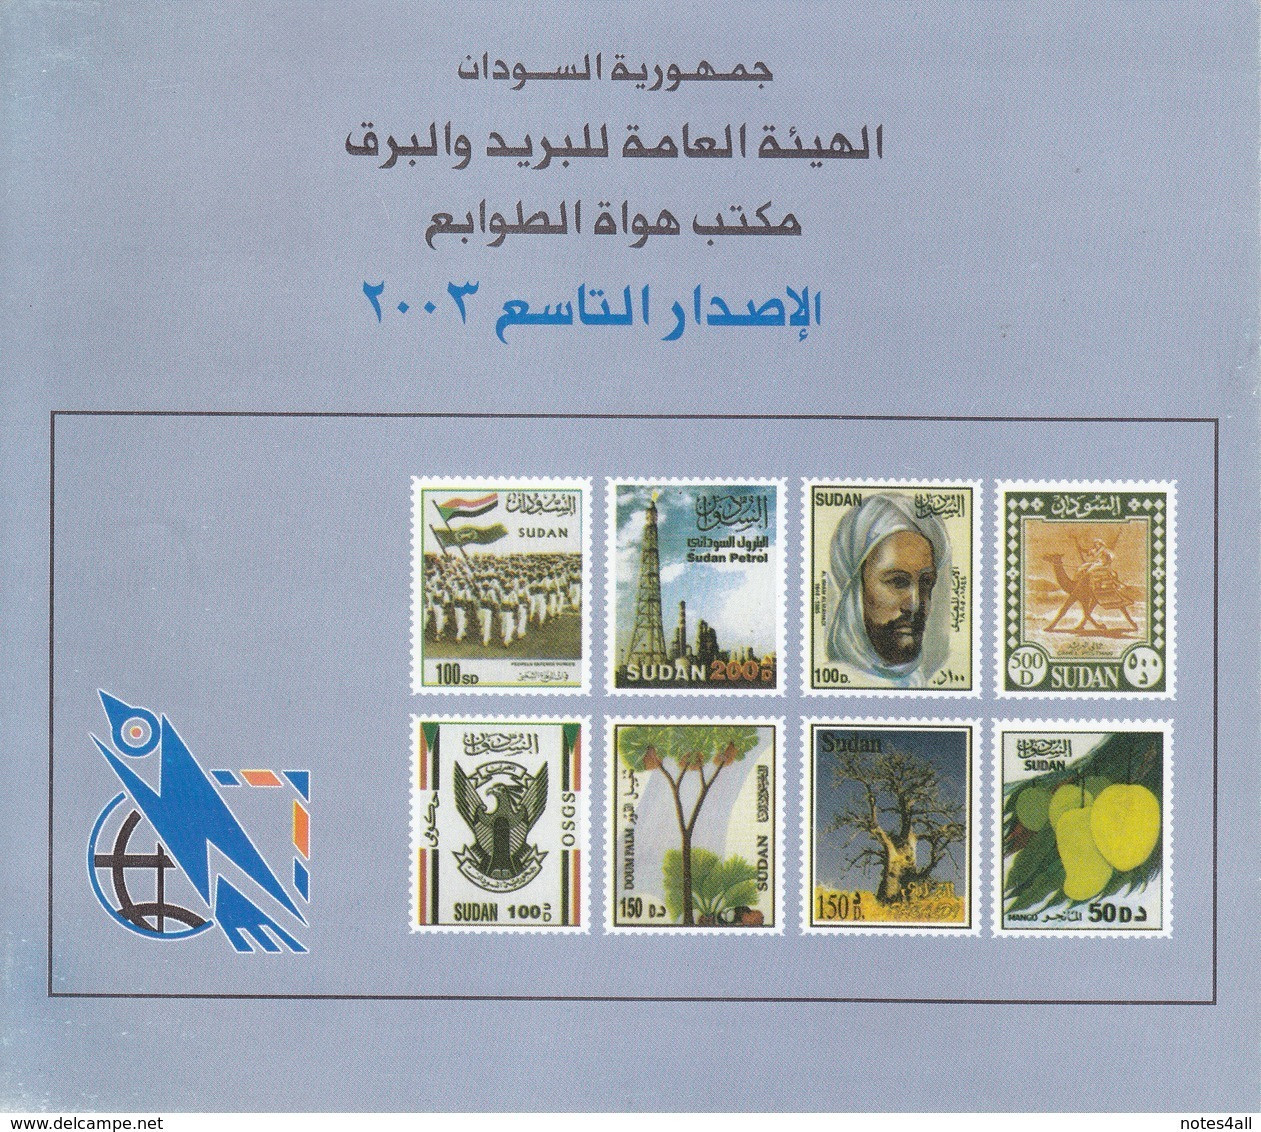 Stamps SUDAN 2003 DEFINITIVE 9TH PERMANENT SC-544 557 SET W FOLDER CV$35 #113 - Soudan (1954-...)